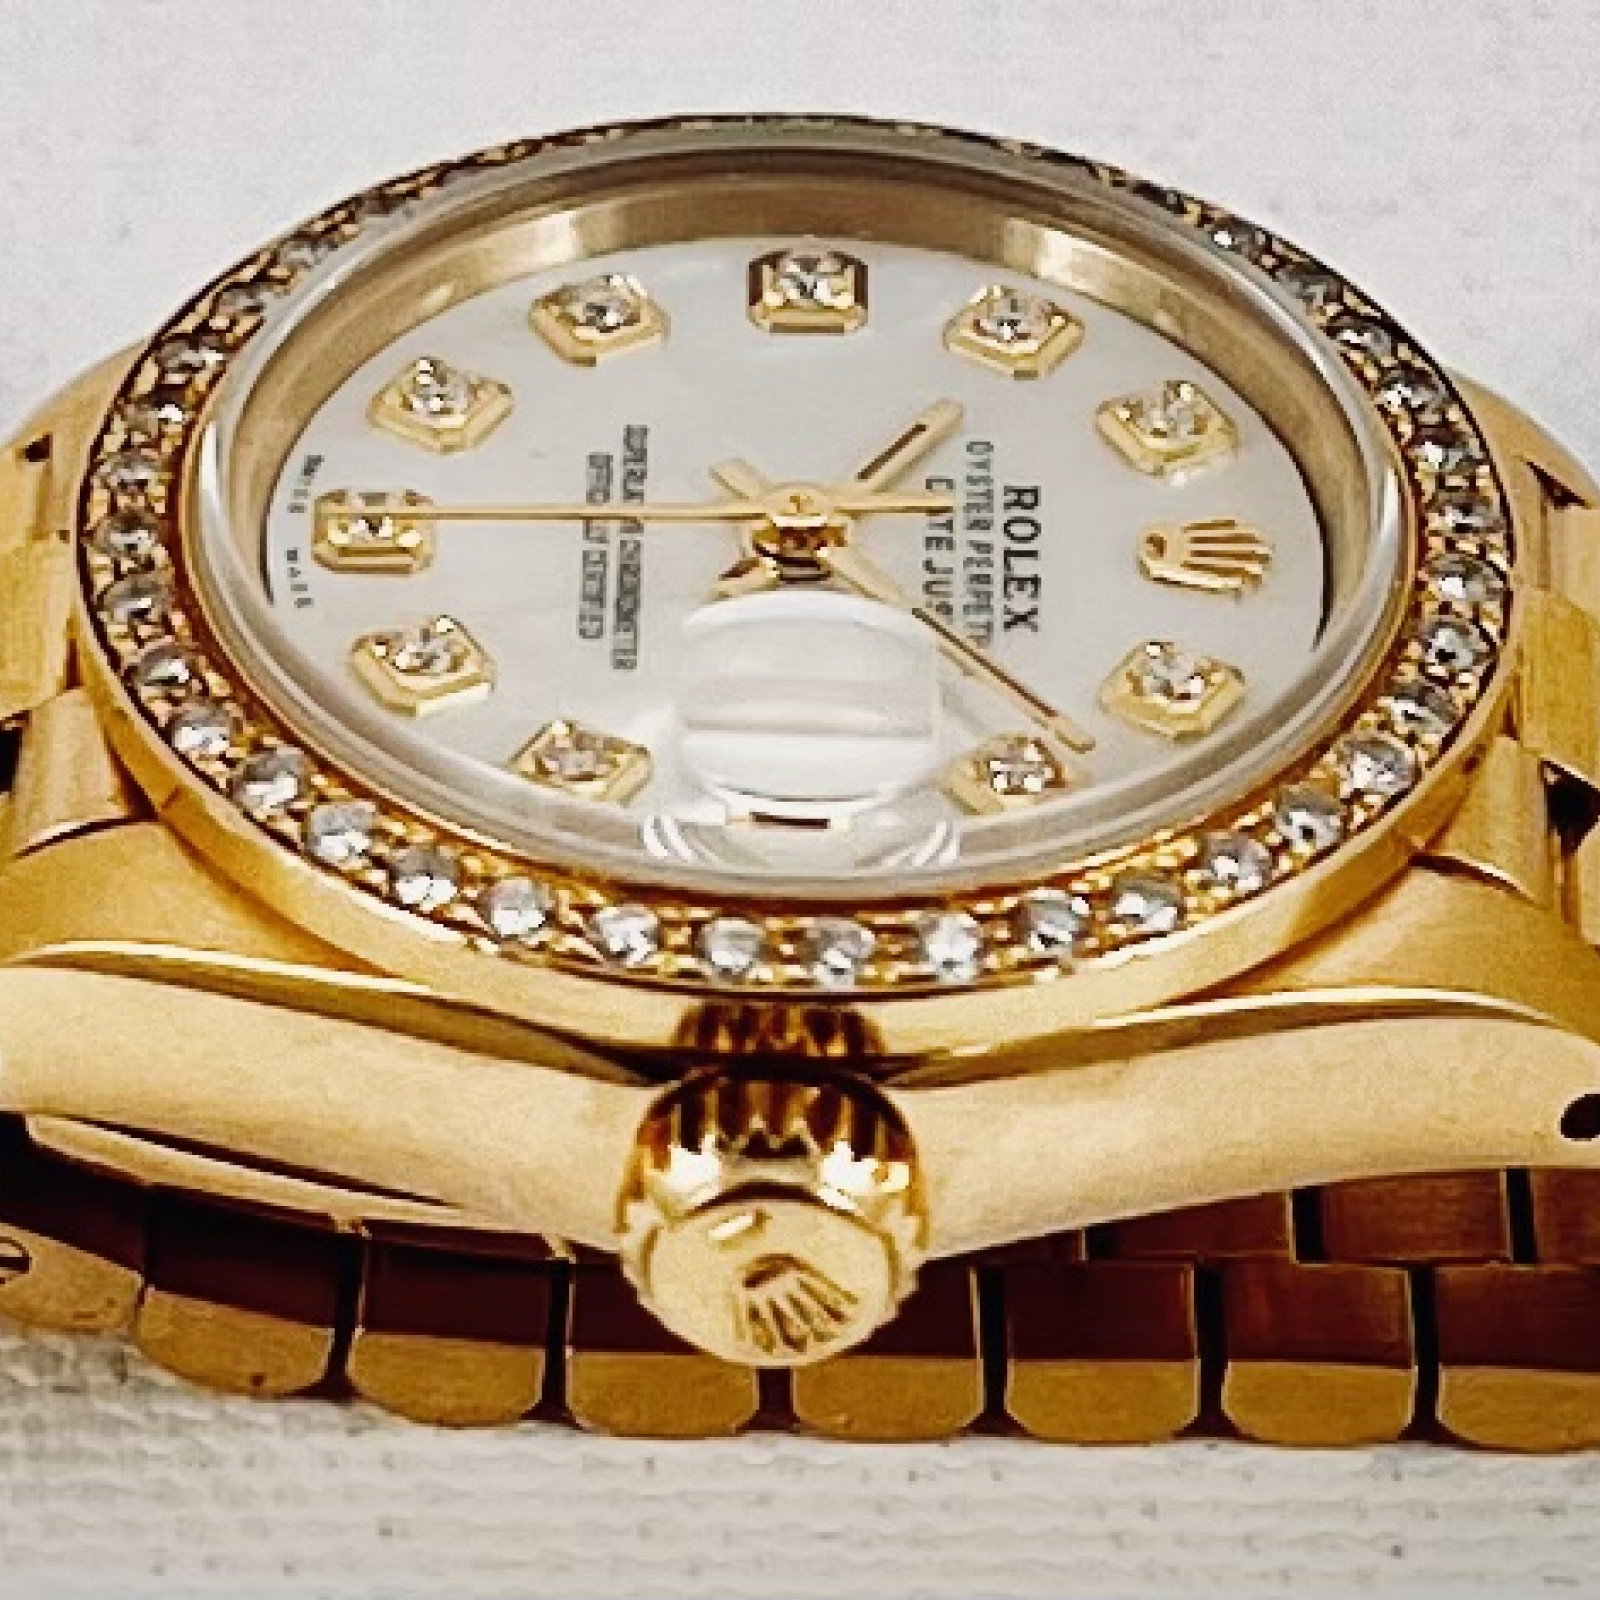 Rolex 18 KT Gold Datejust 6917